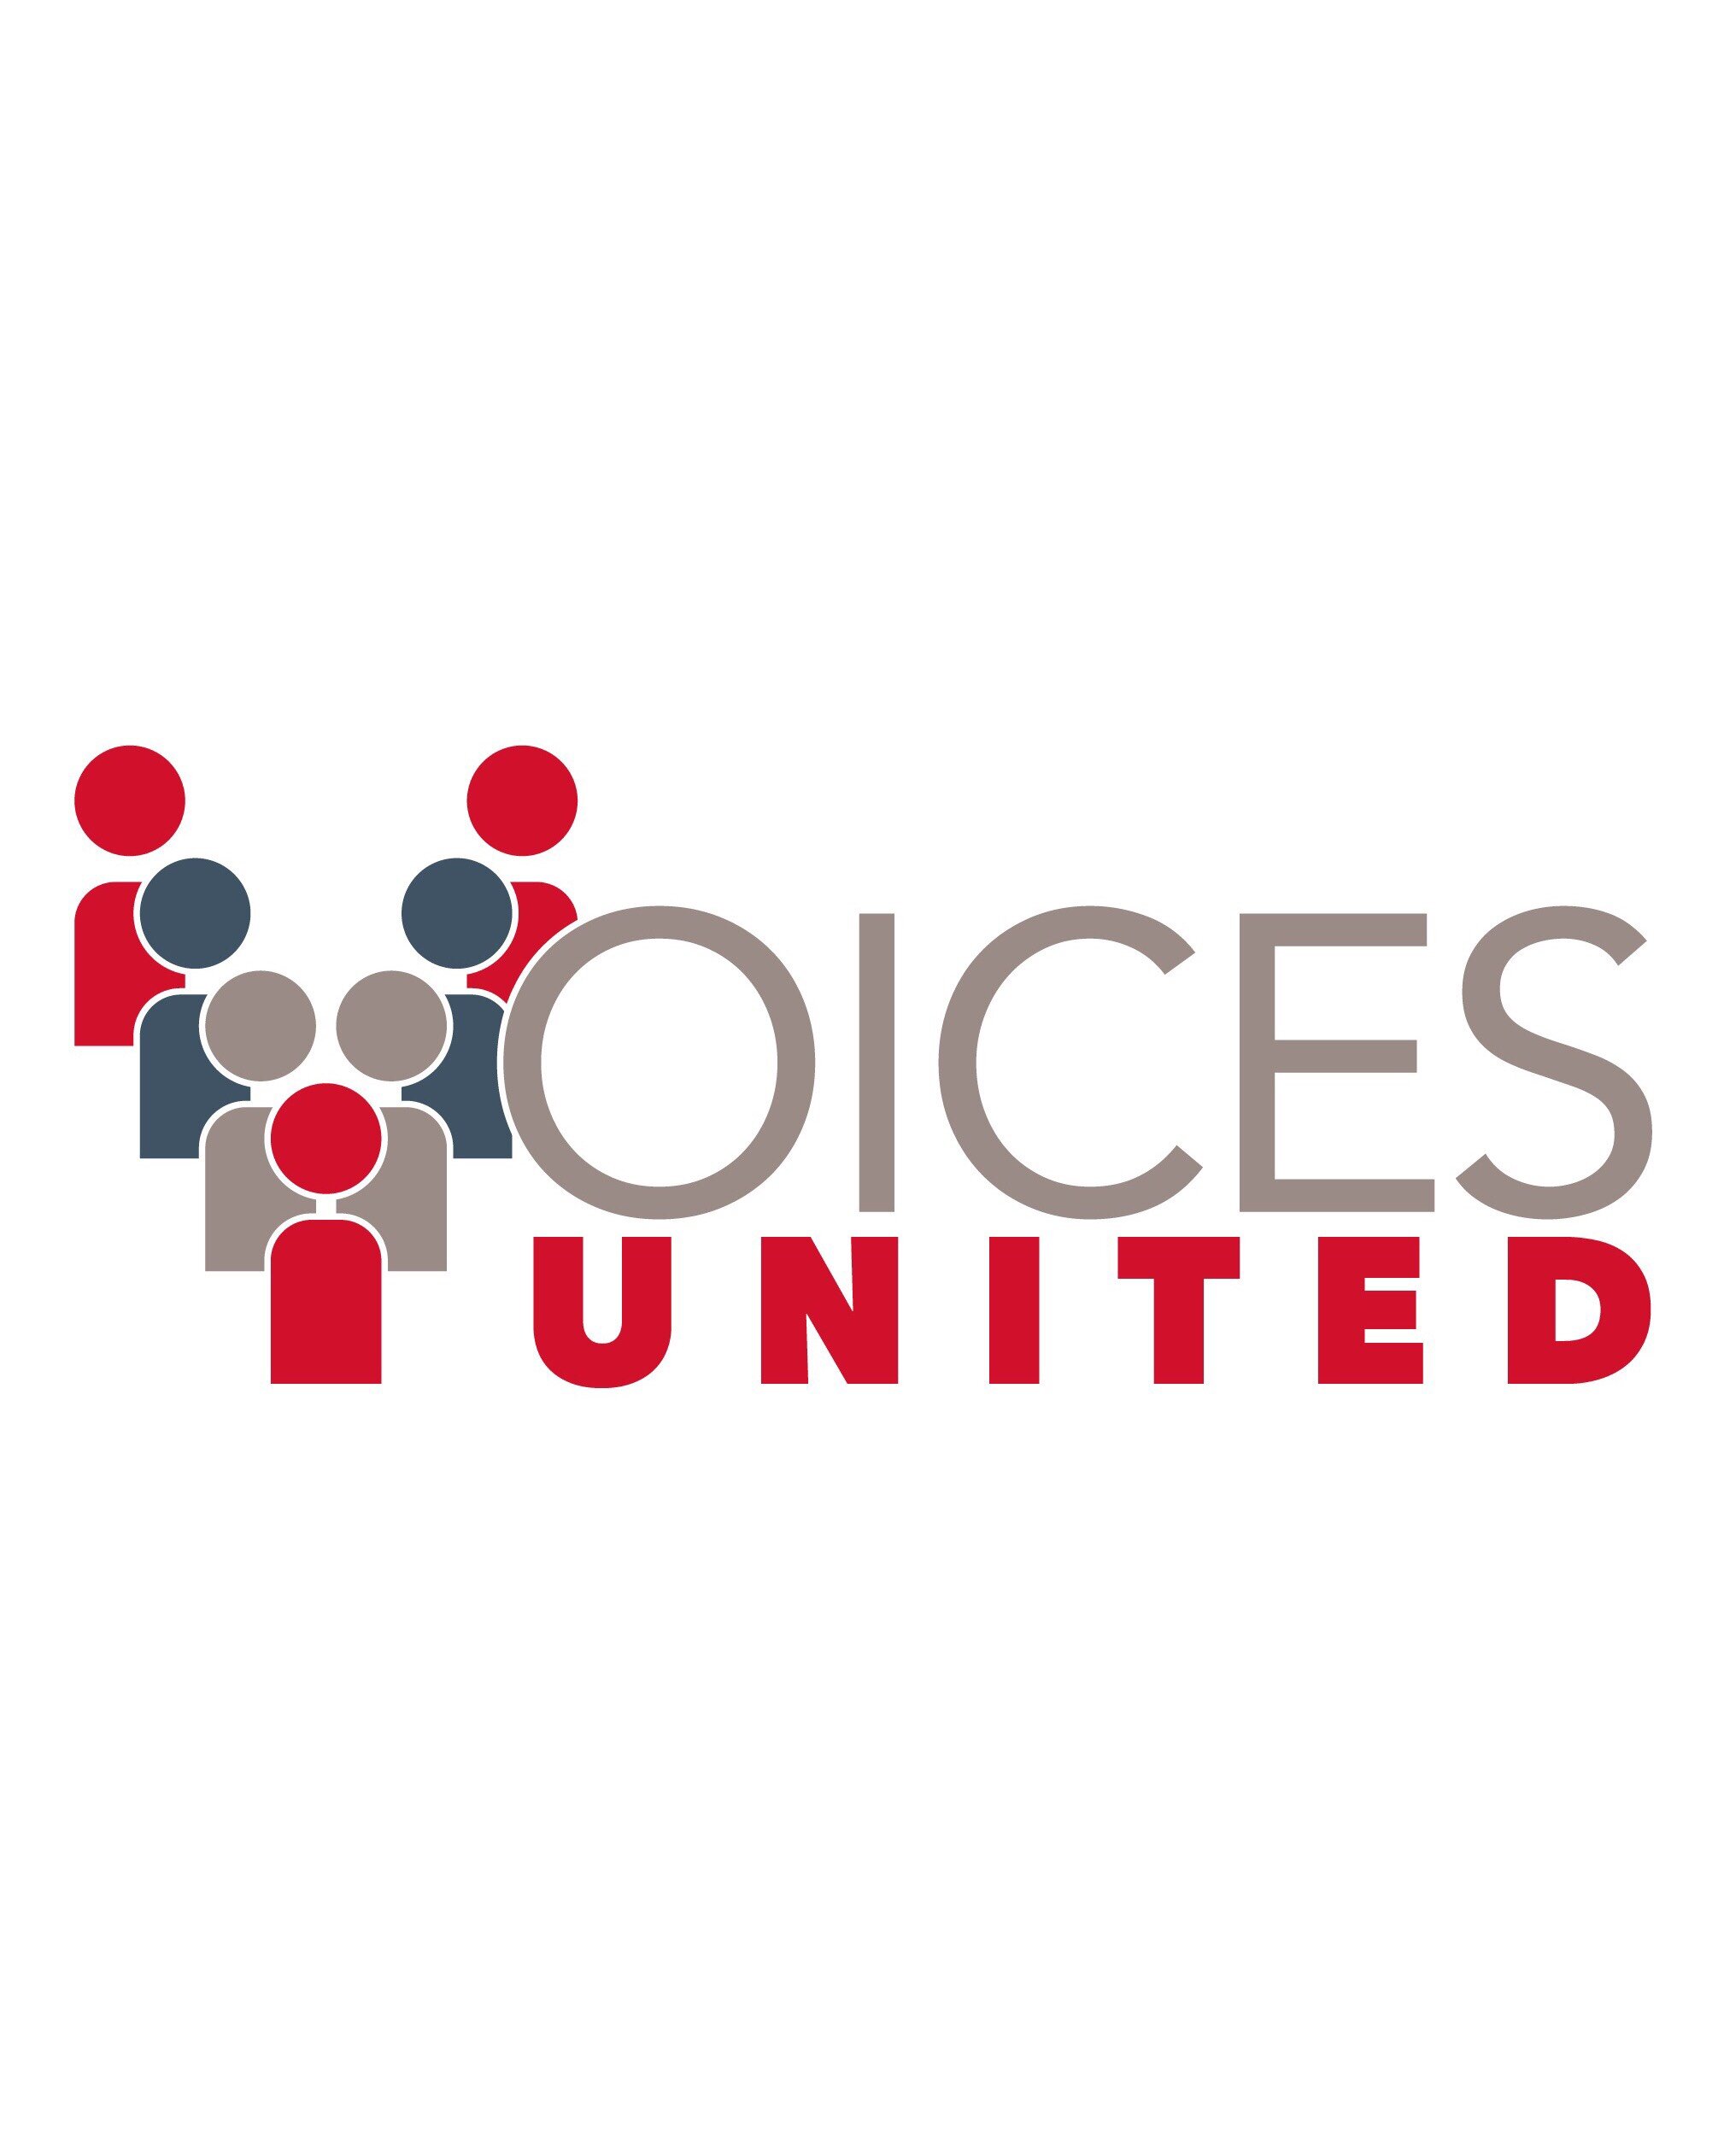 VoicesUnited Logo.jpeg